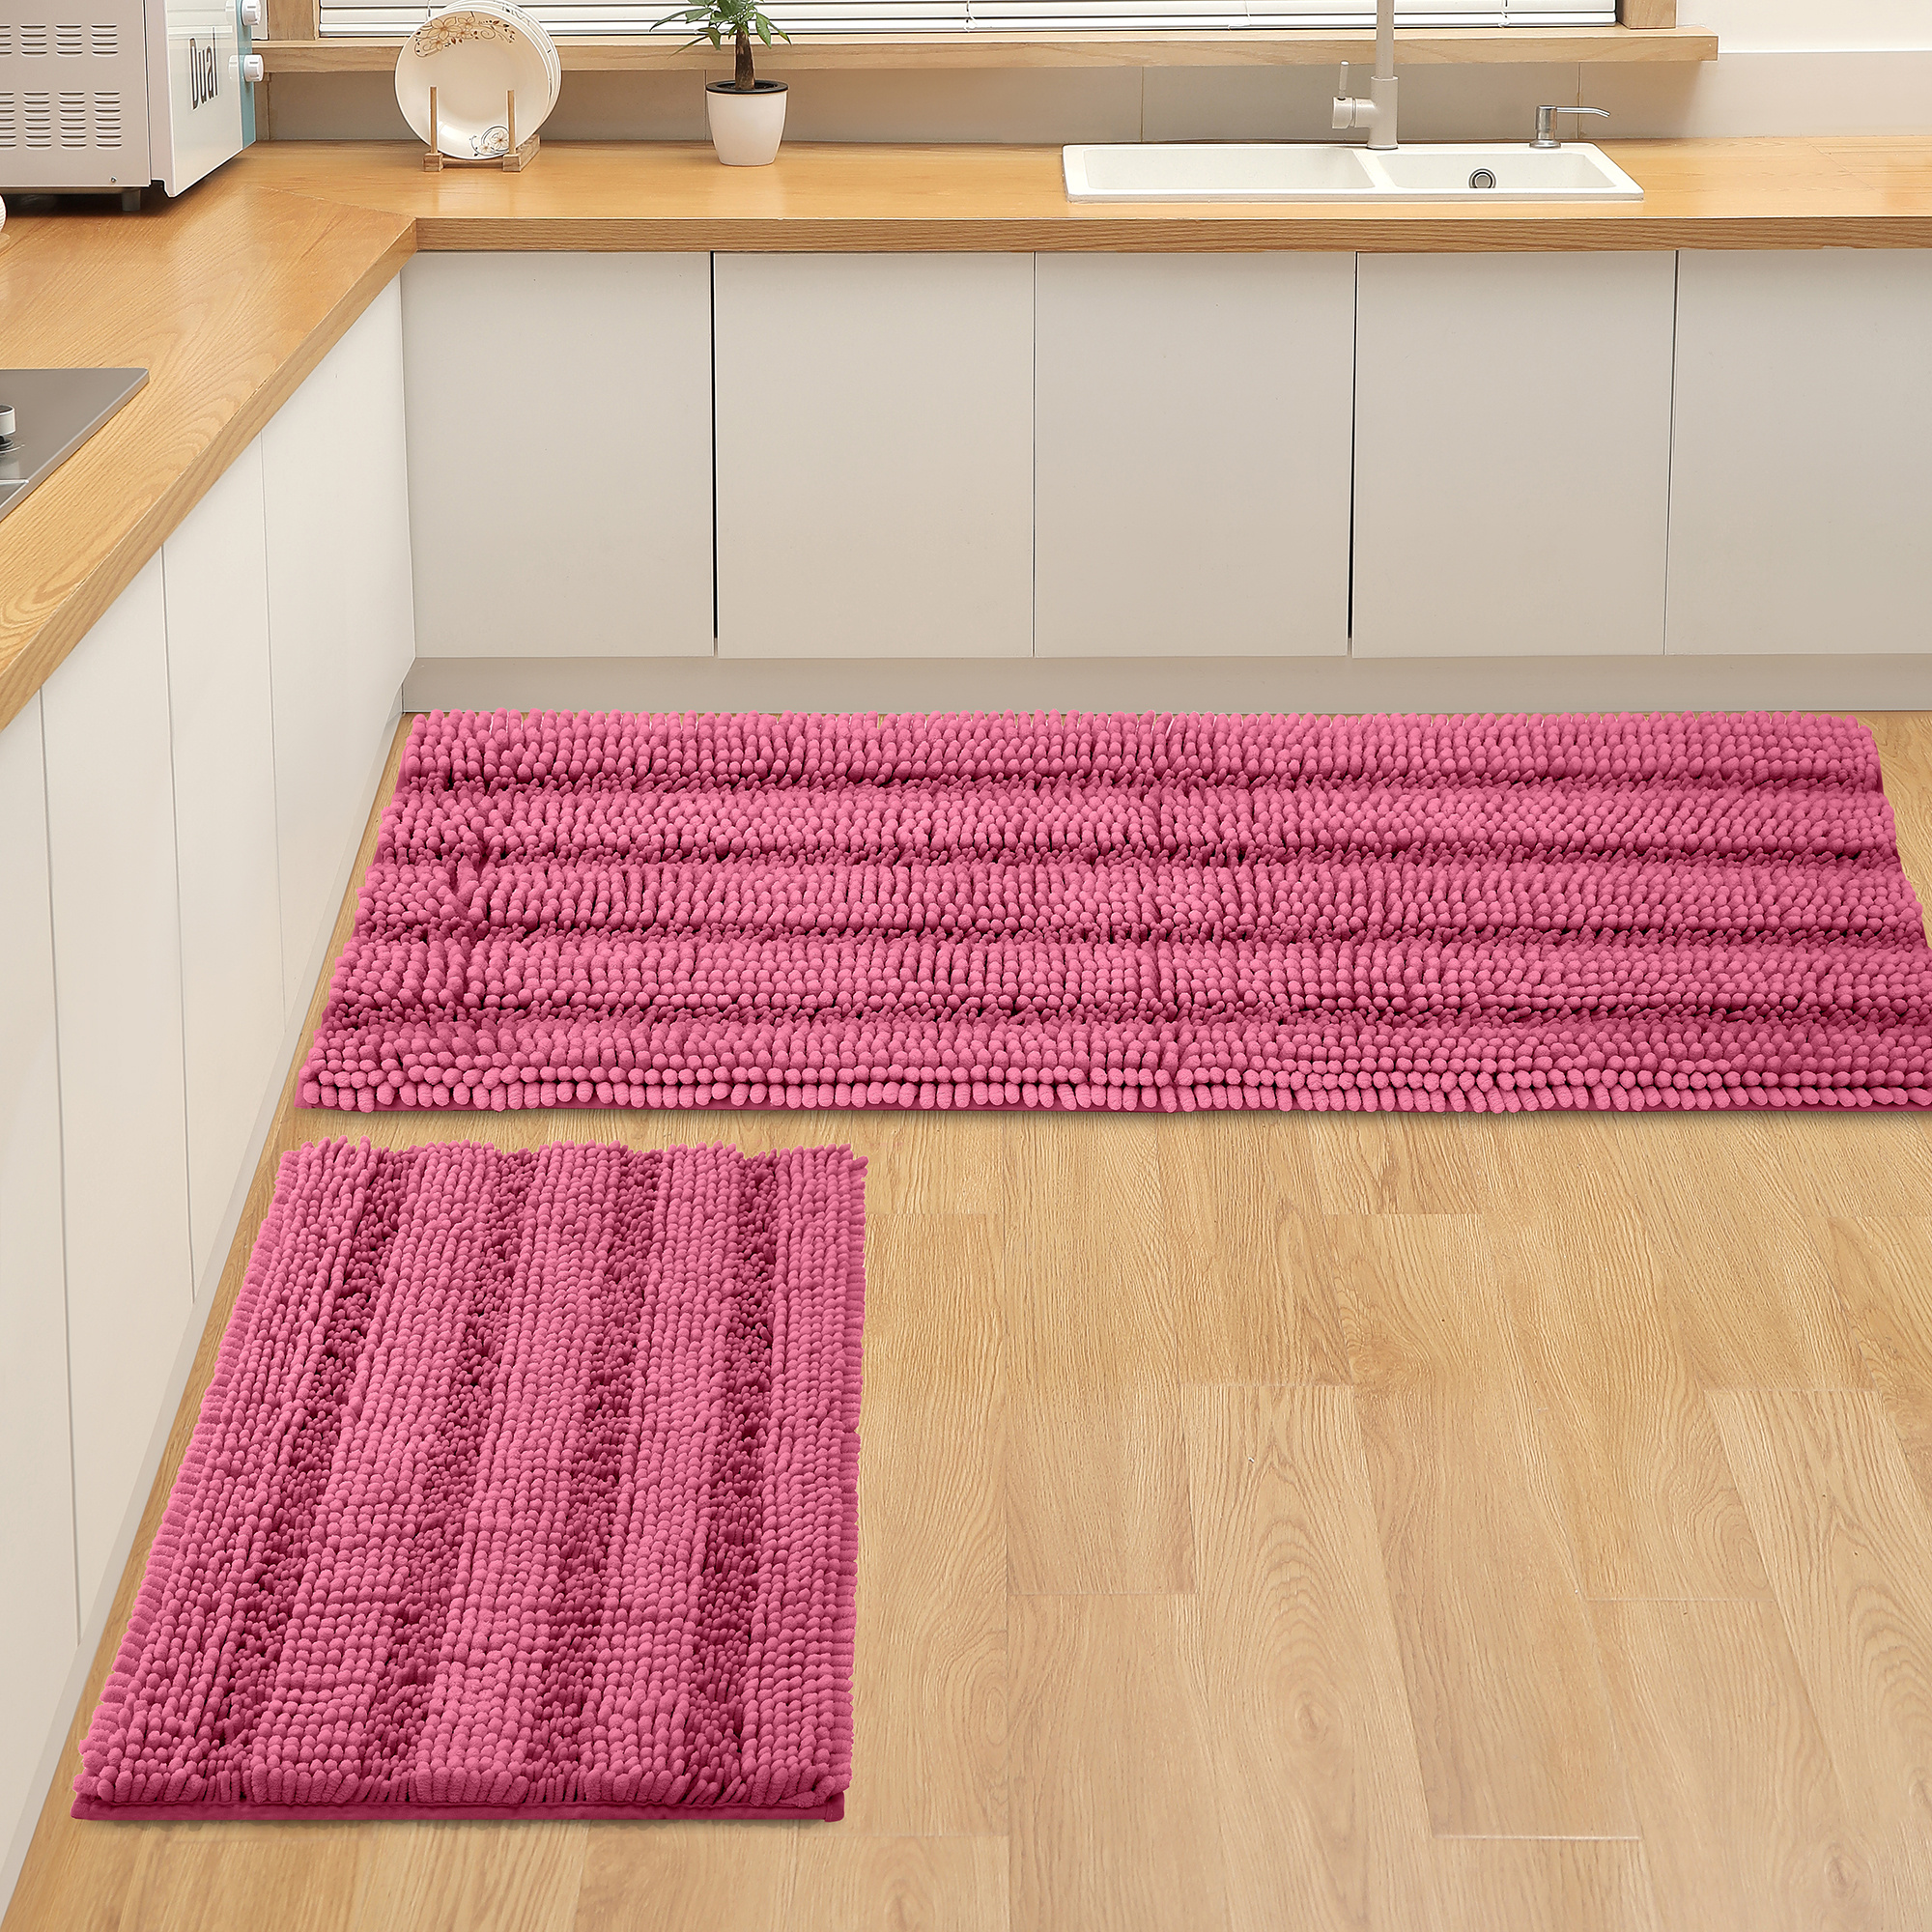 mnjin bathroom rug mat extra soft and absorbent microfiber bath rugs non  slip shaggy bath carpet machine wash dry bath mats for bathroom floor tub  and shower hot pink 